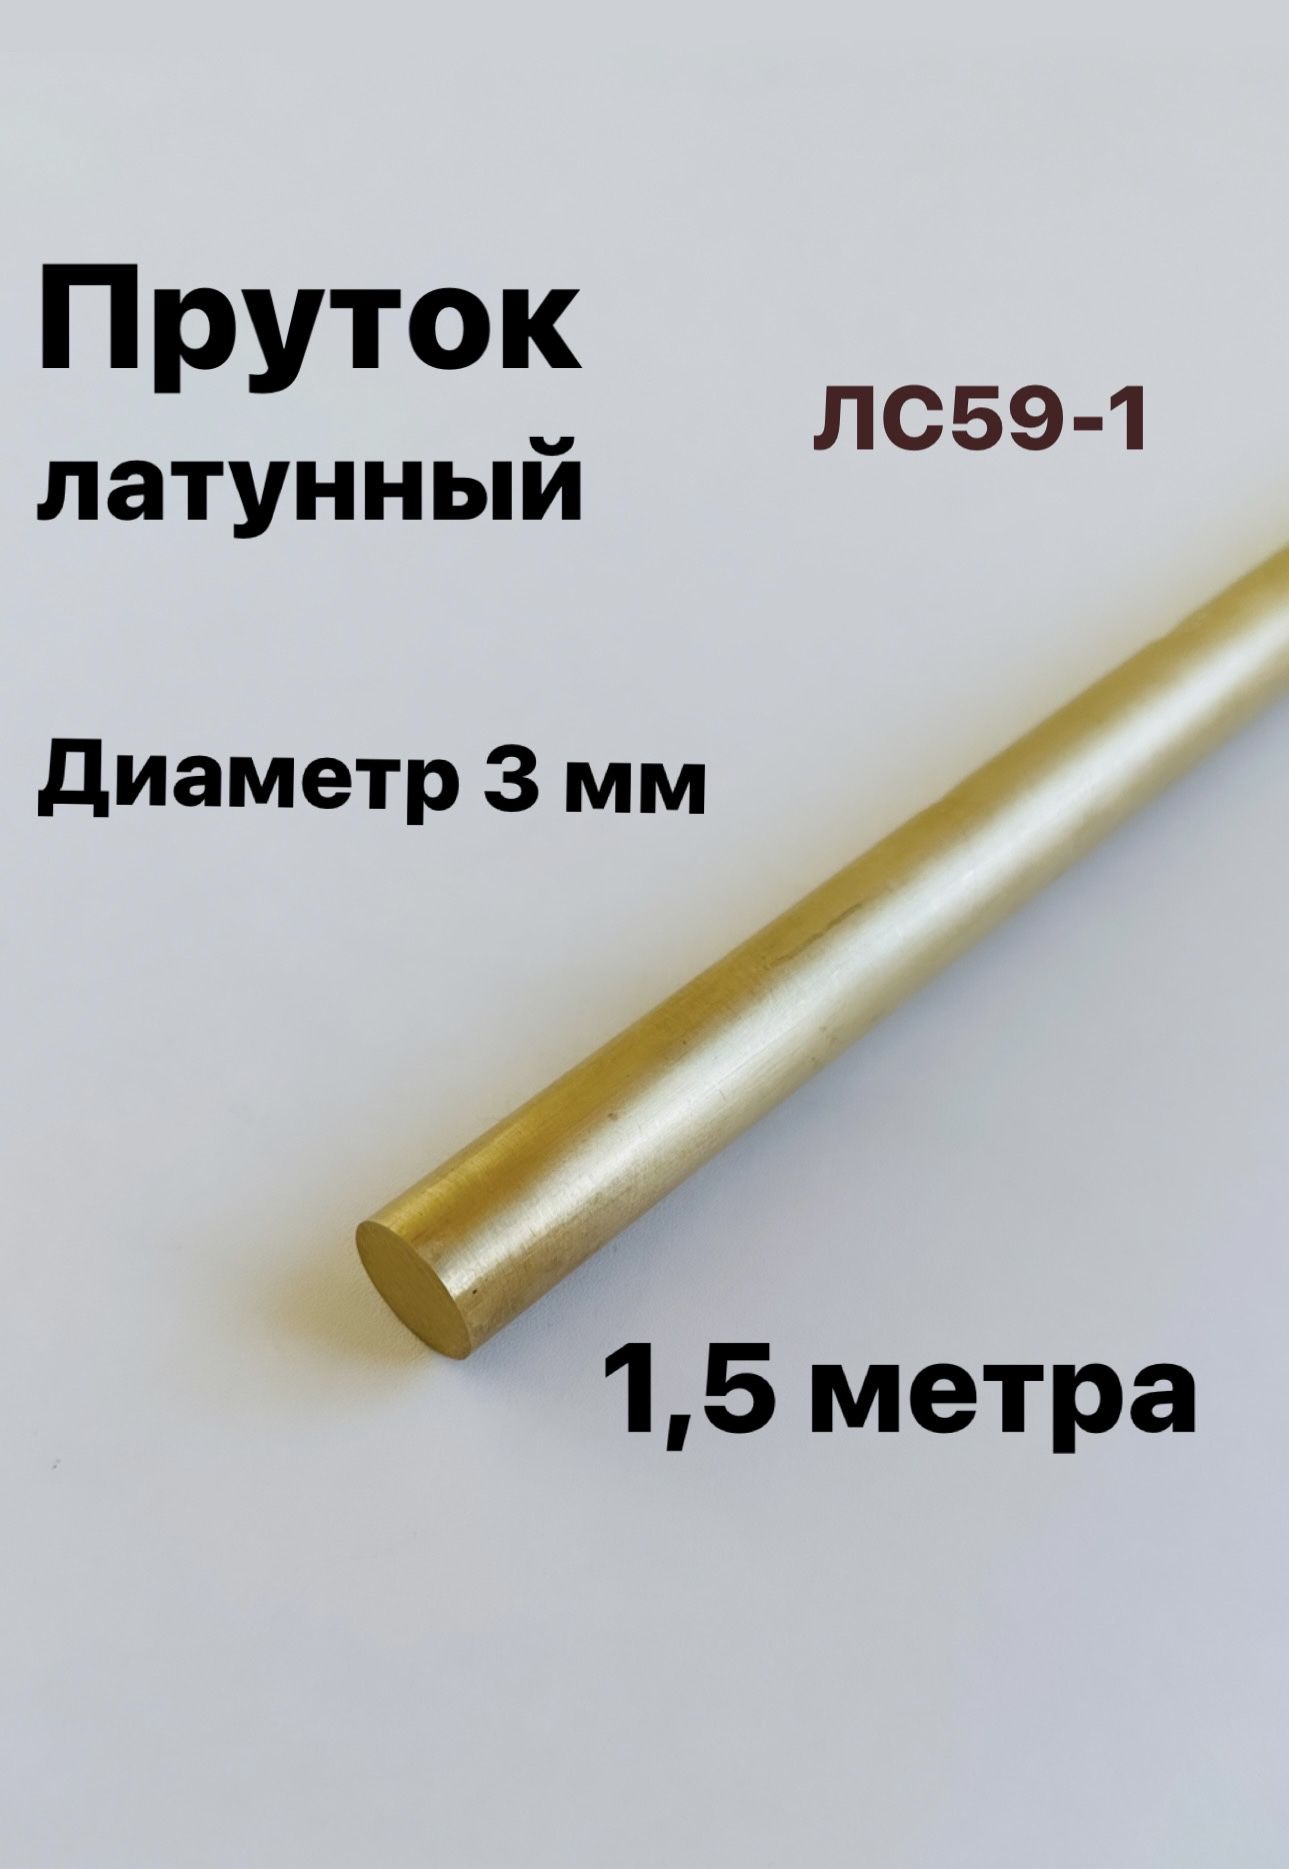 ПрутокЛатунныйЛС59-1,диаметр3мм,длина1,5метра